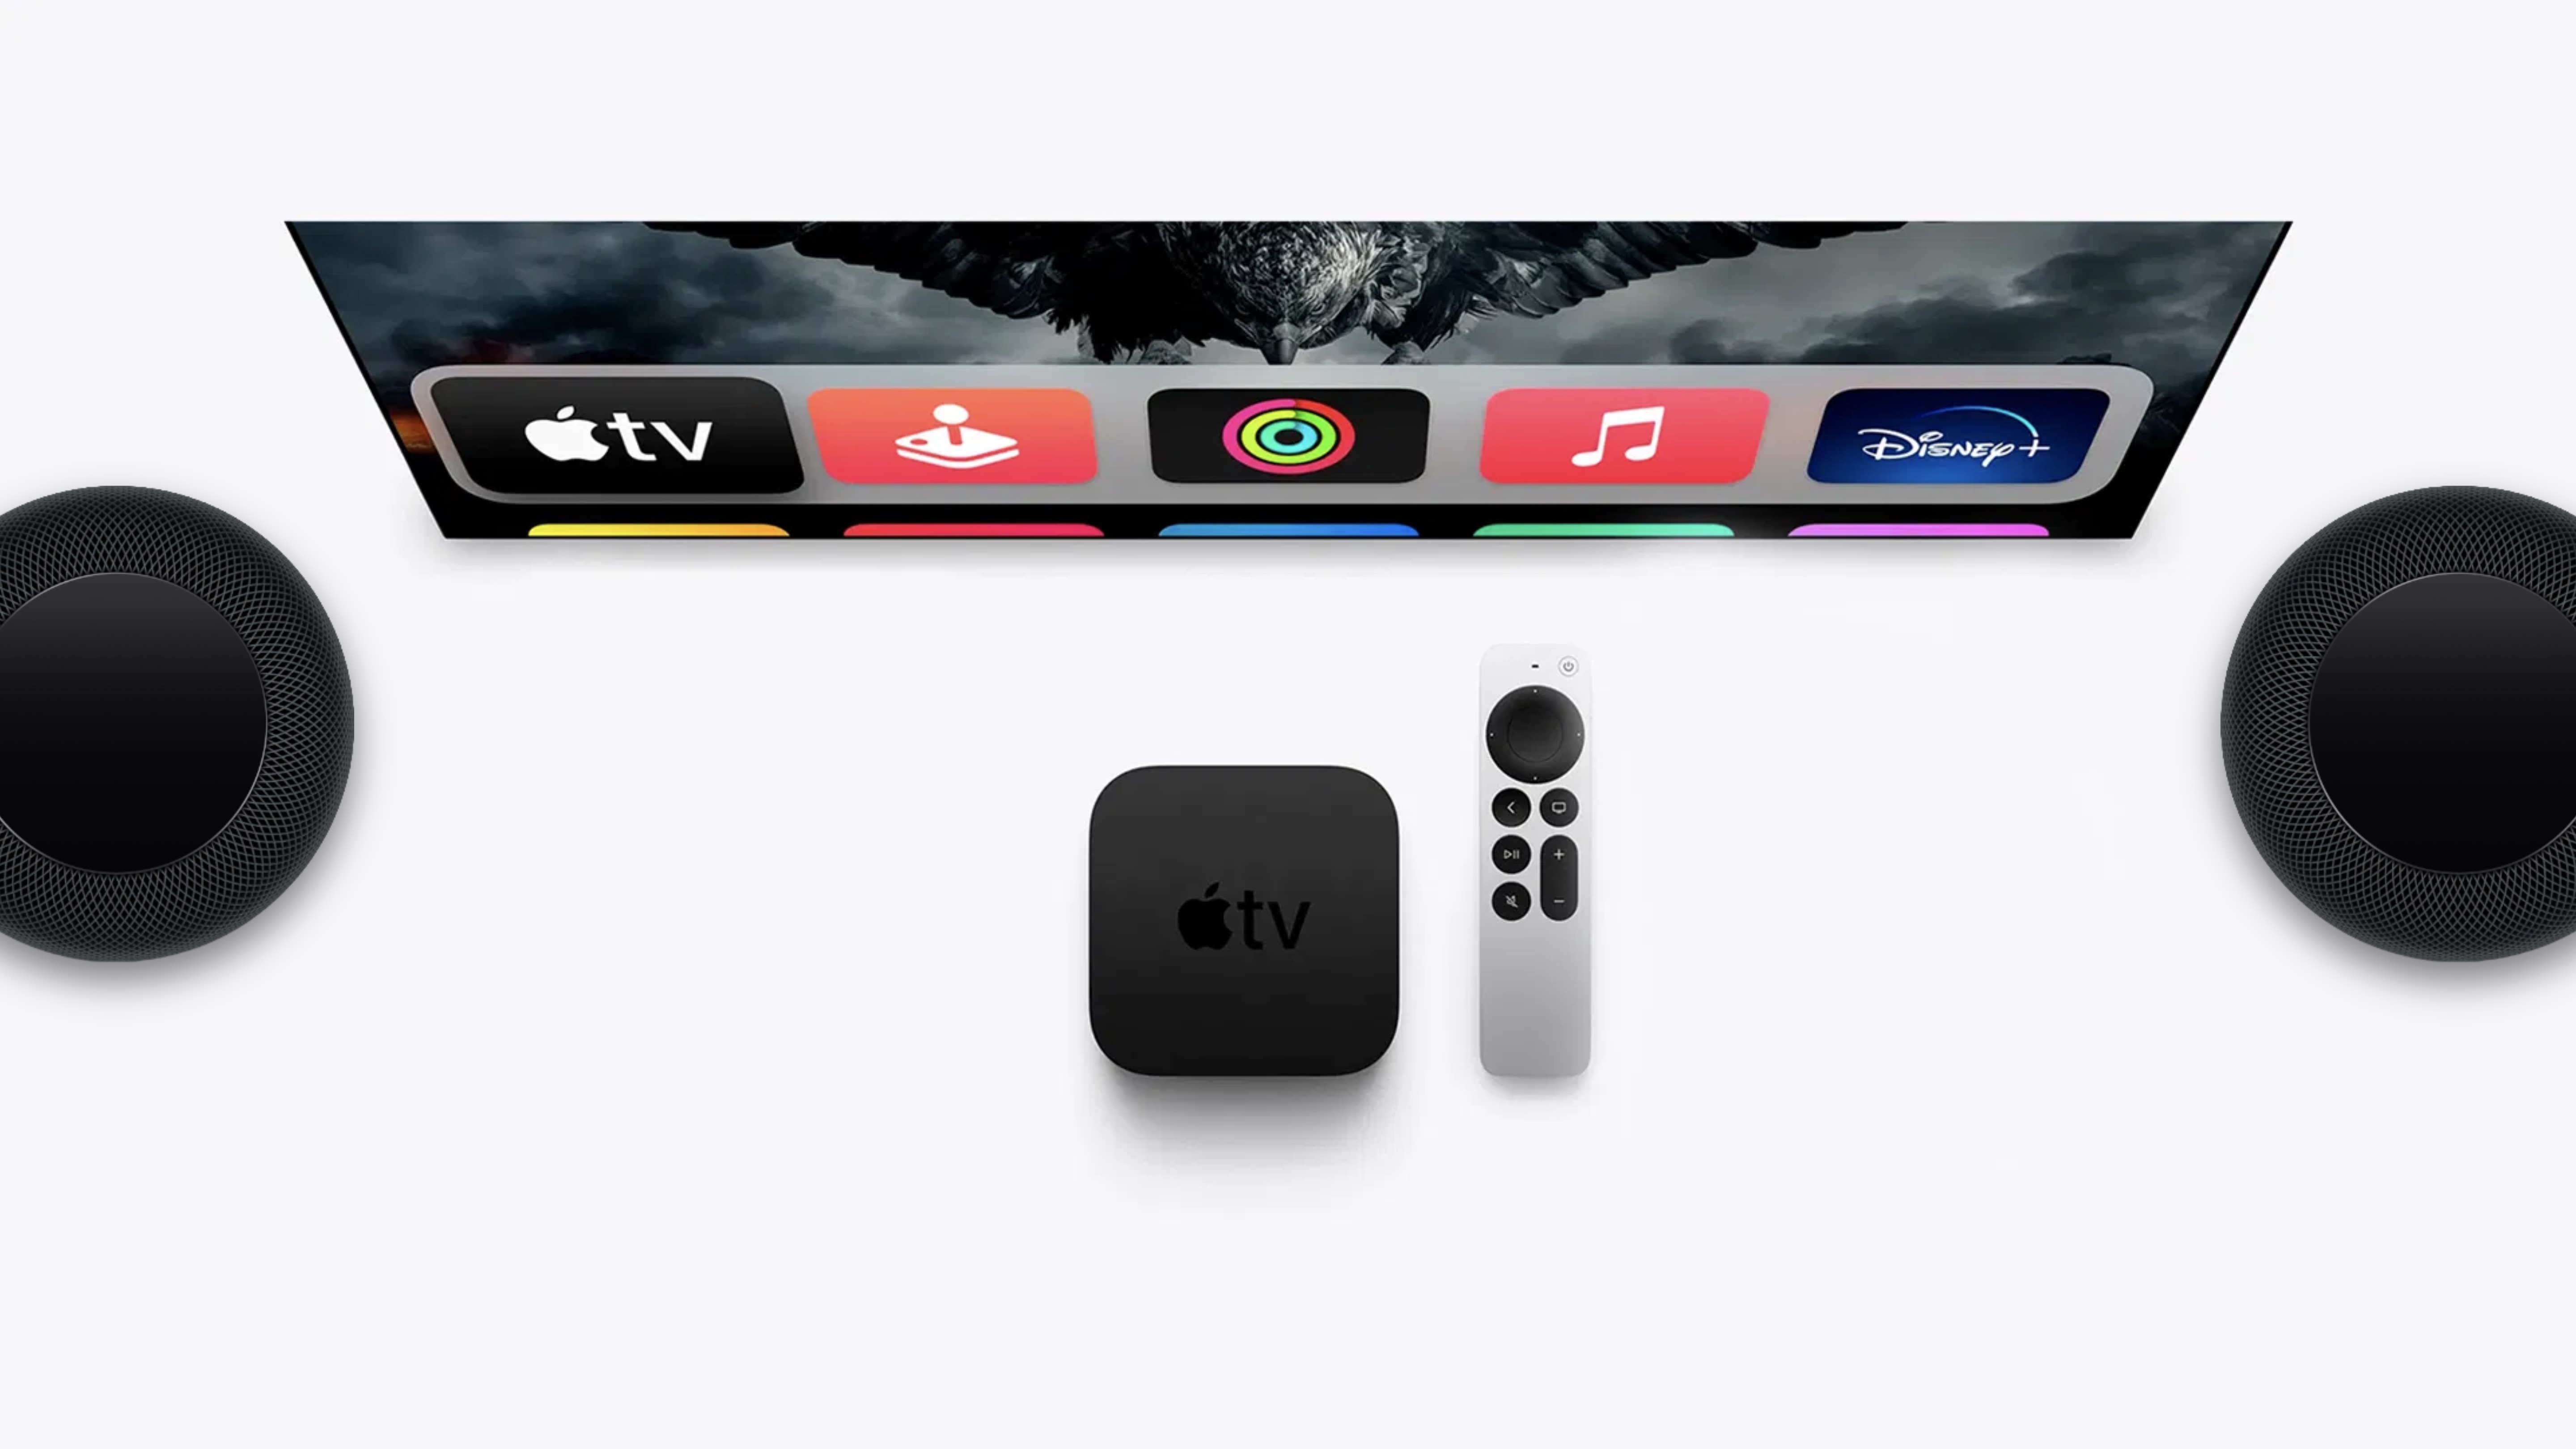 Auto Barry Påstået Verizon launching new Fios TV app for Apple TV this week - 9to5Mac